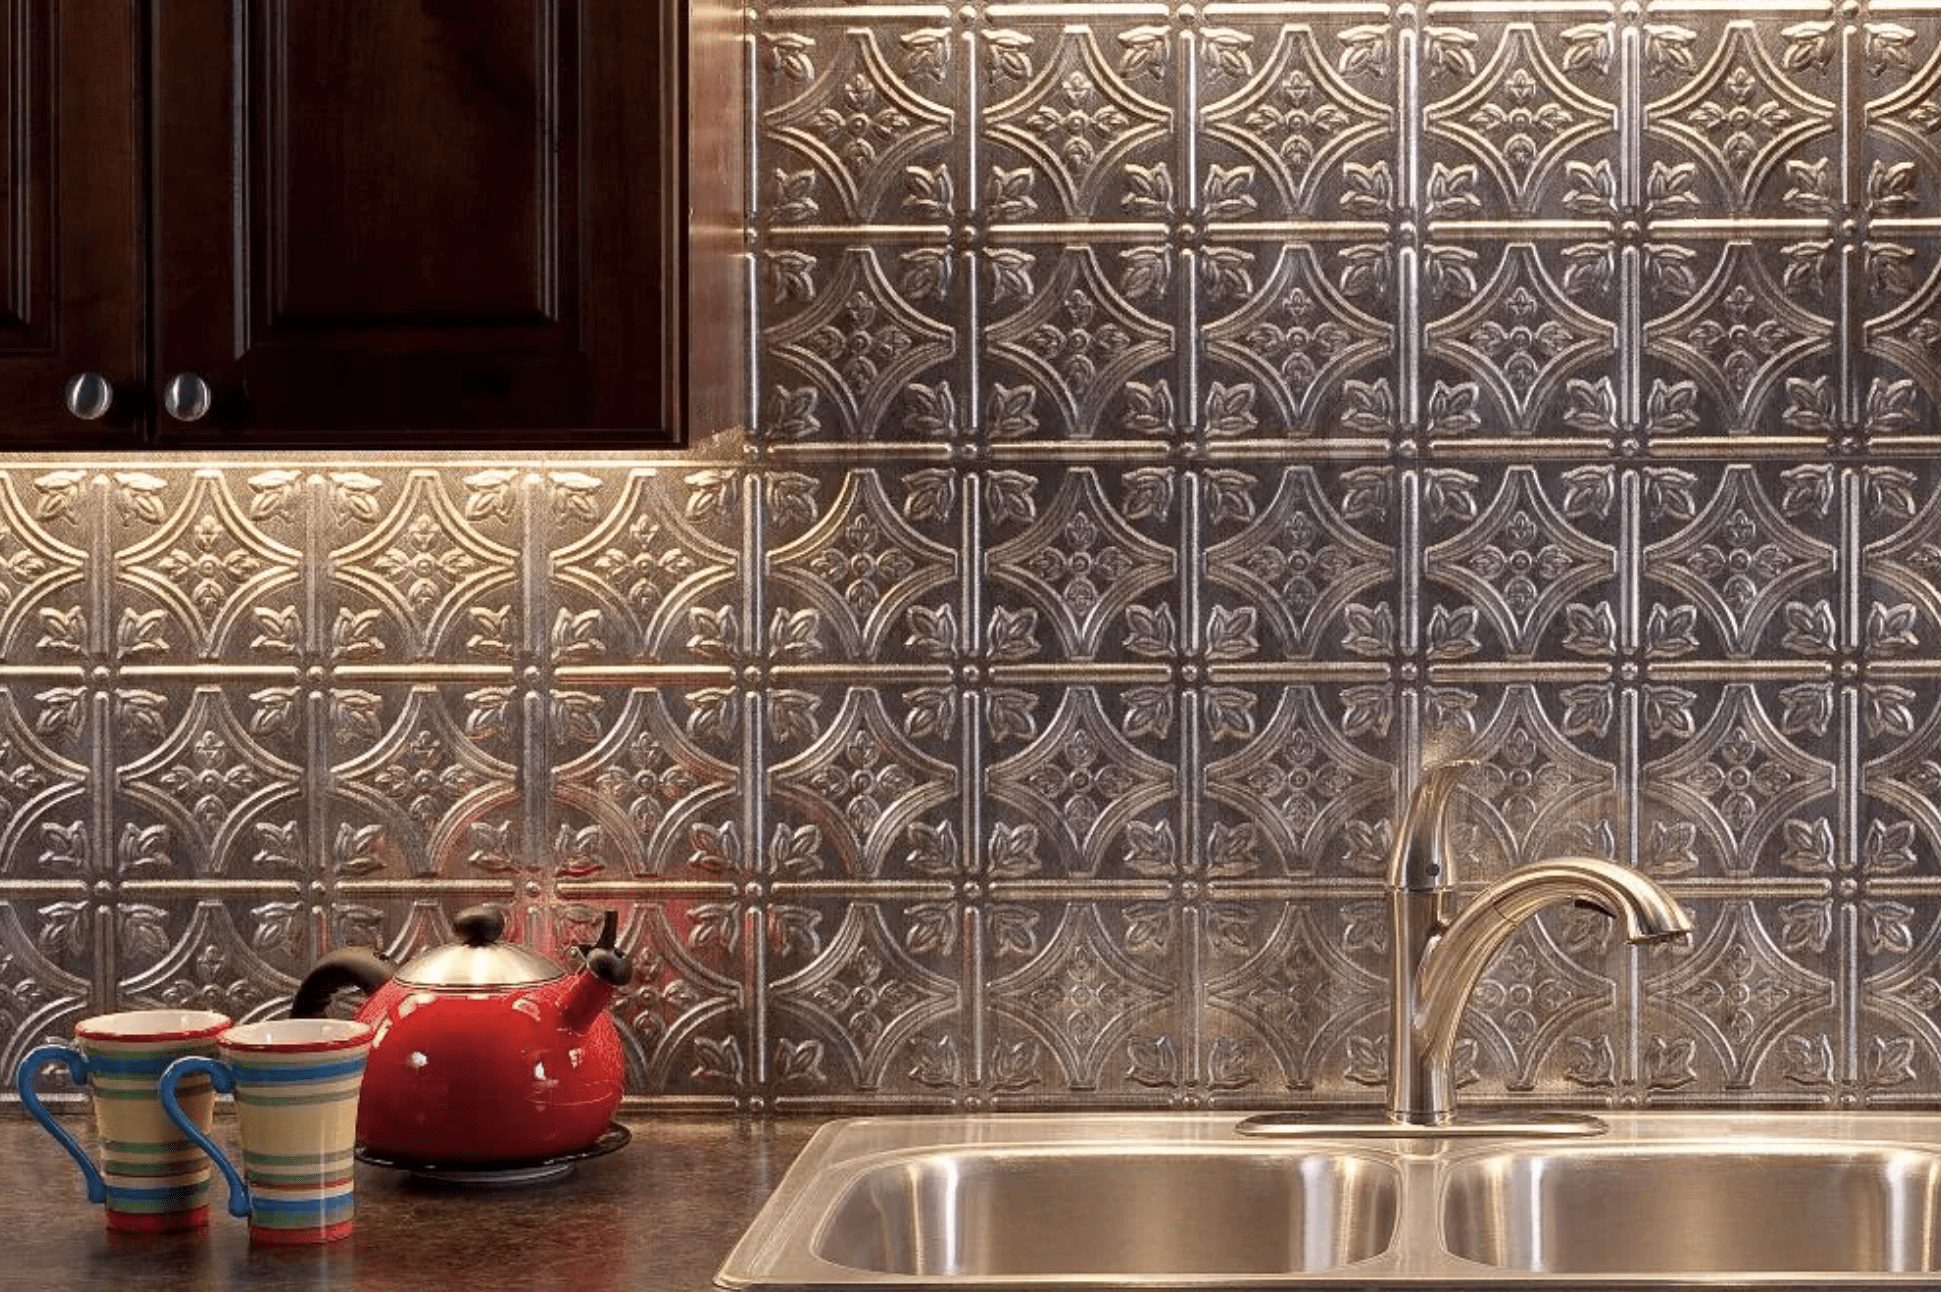 awesome kitchen tile backsplash